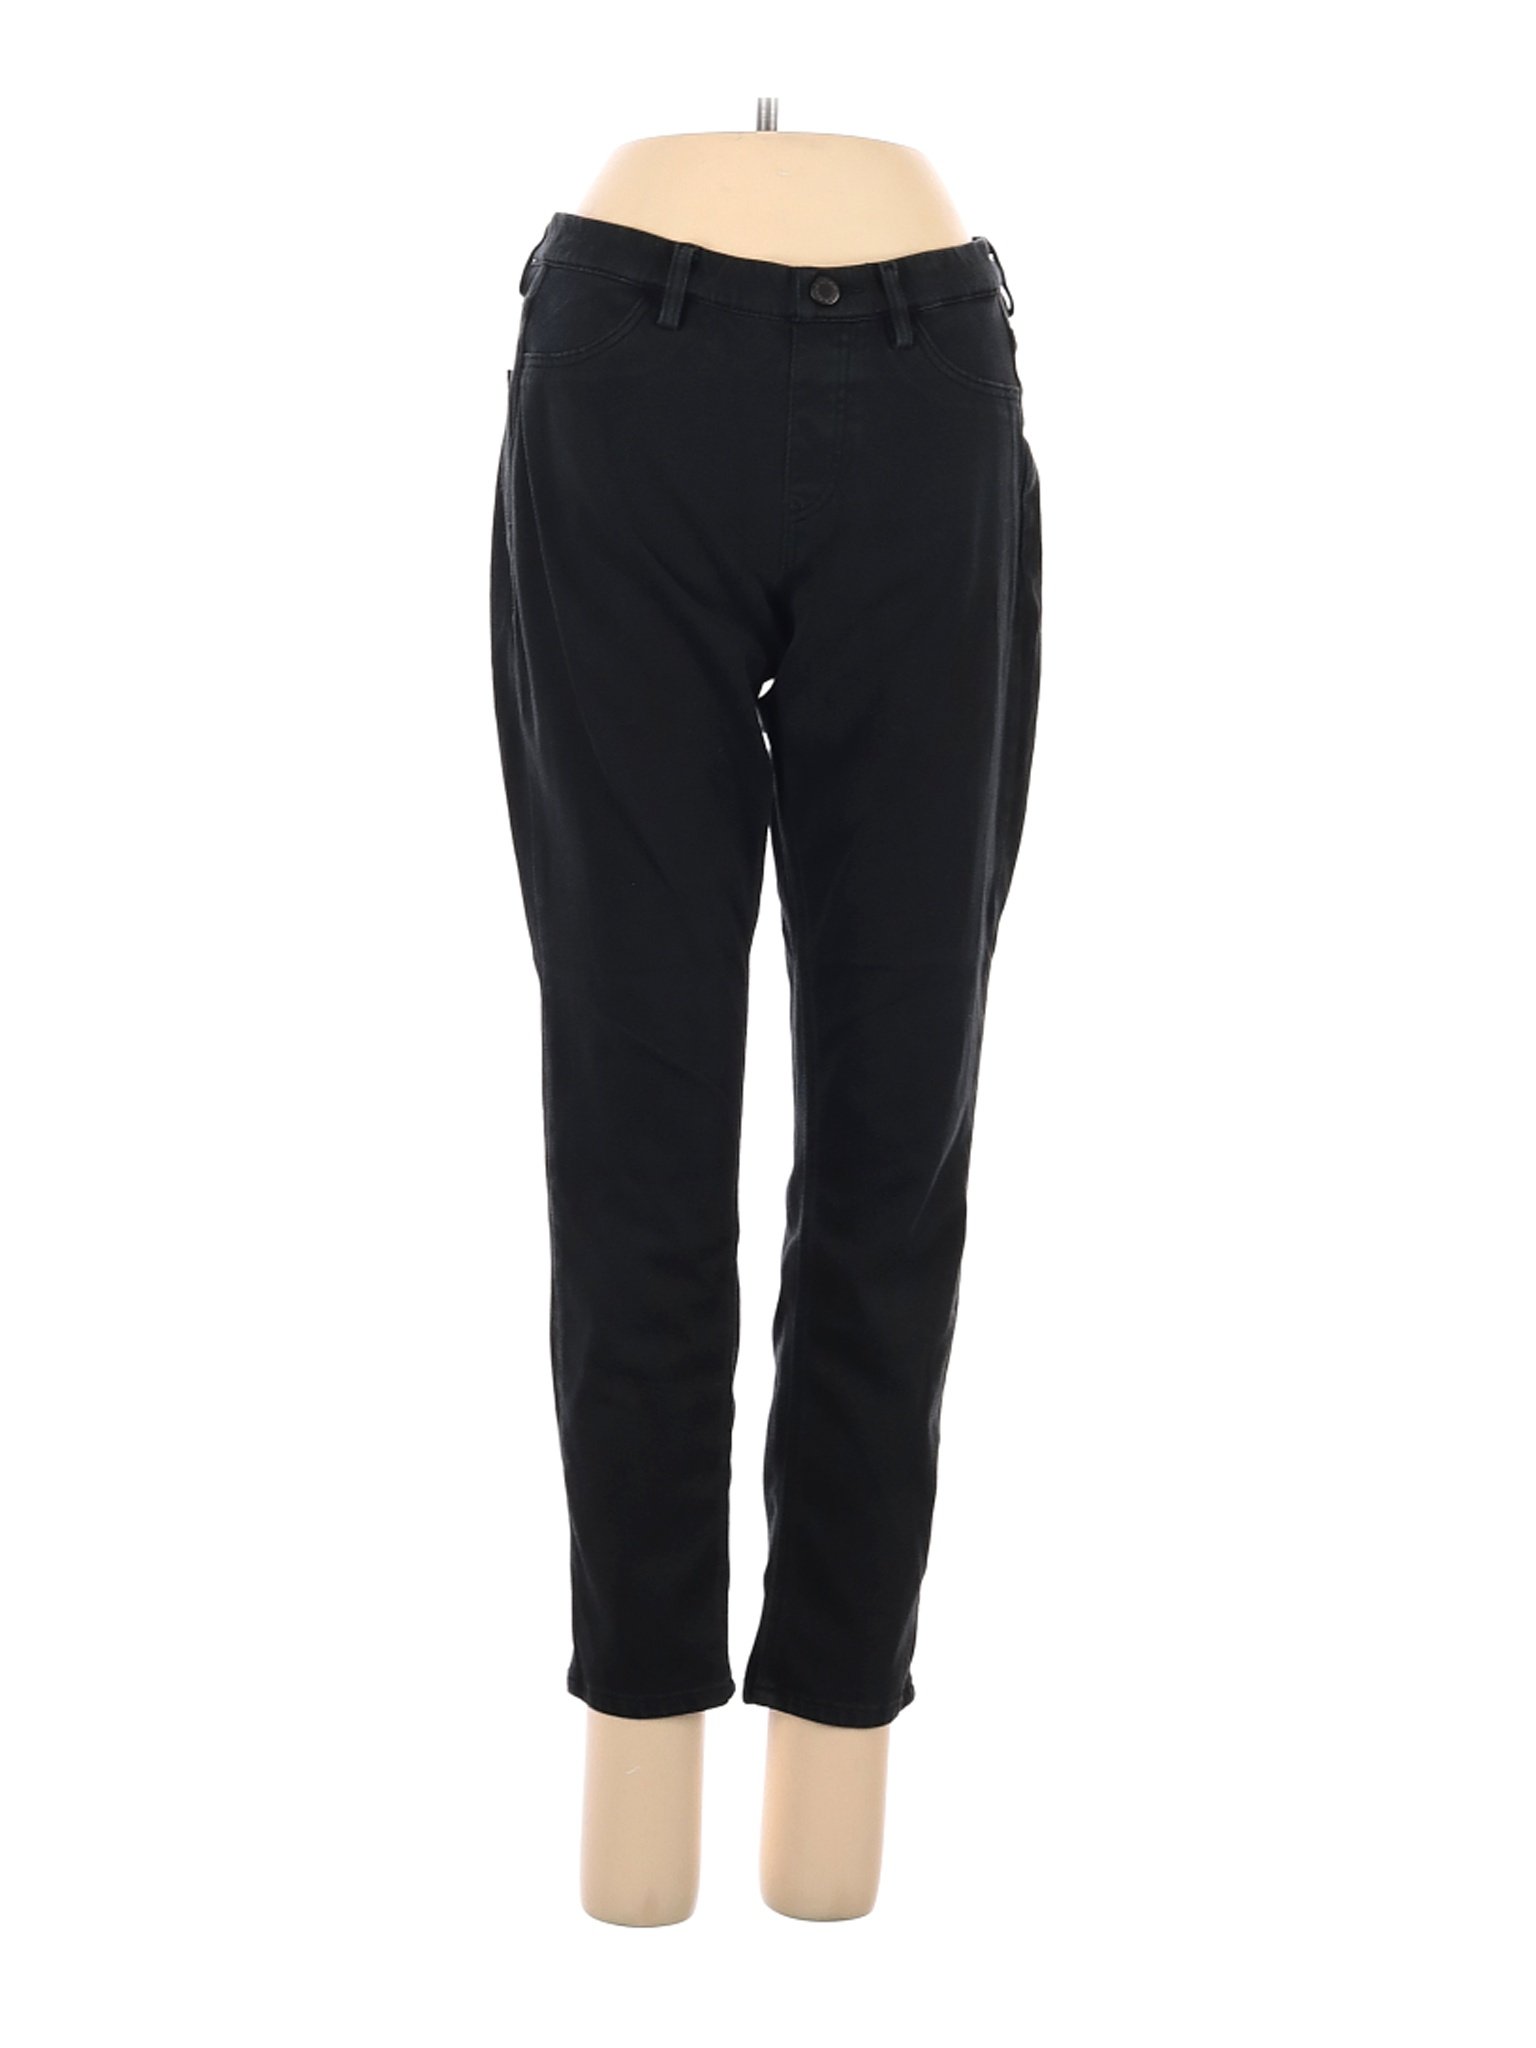 Uniqlo Women Black Casual Pants 26W | eBay